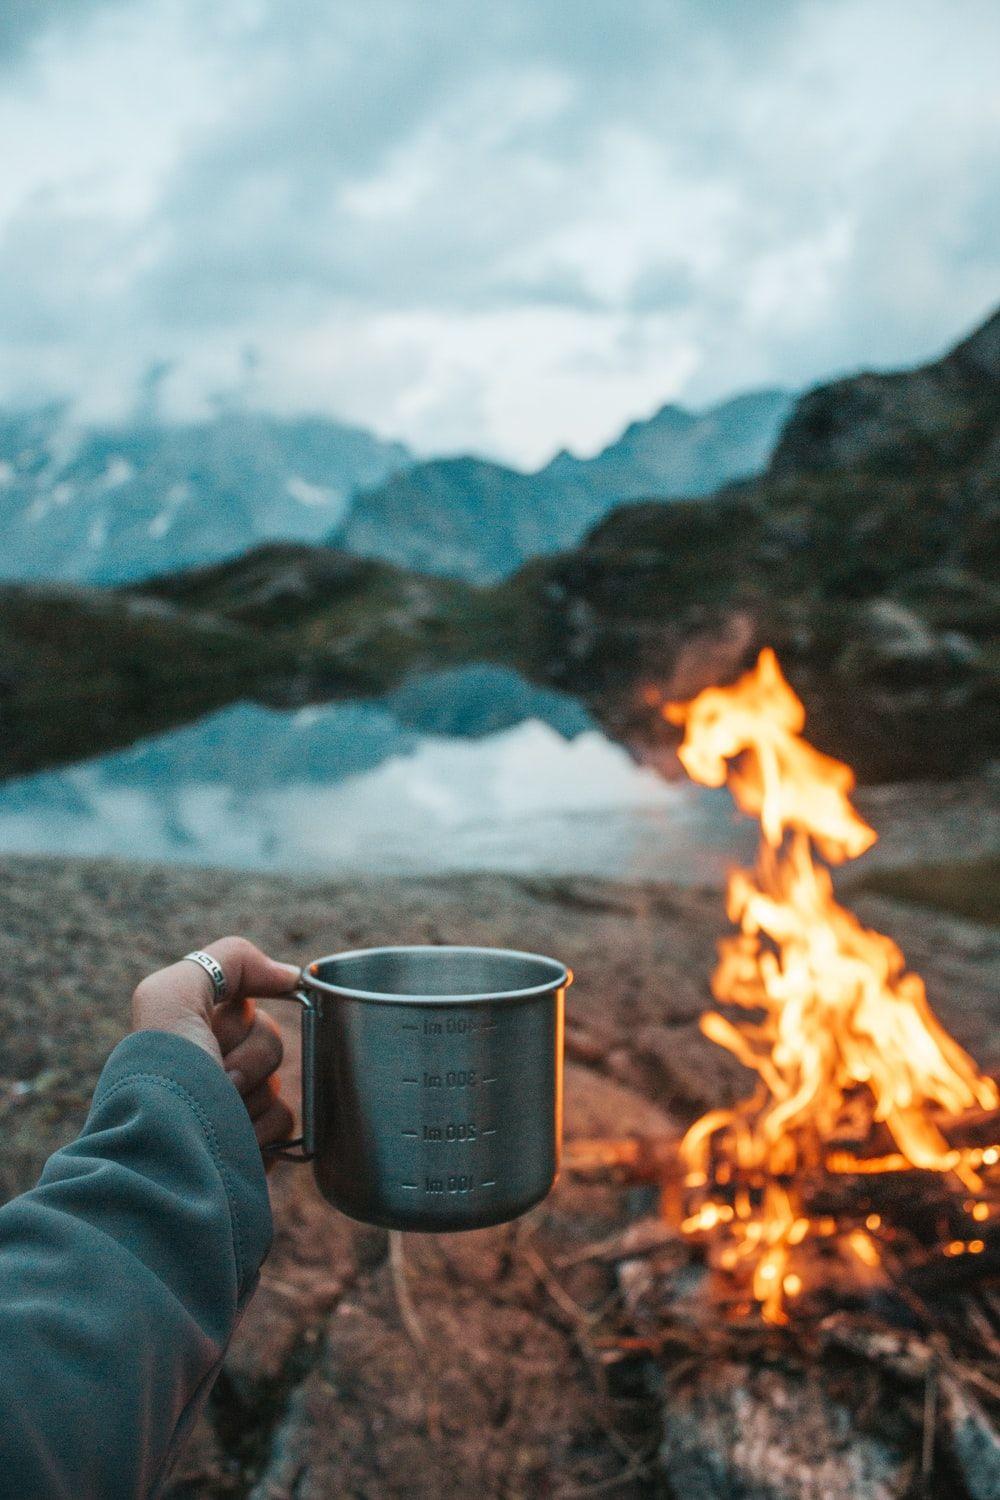 عکس زمینه کمپ زدن کنار دریاچه همراه اتش و چای داغ 